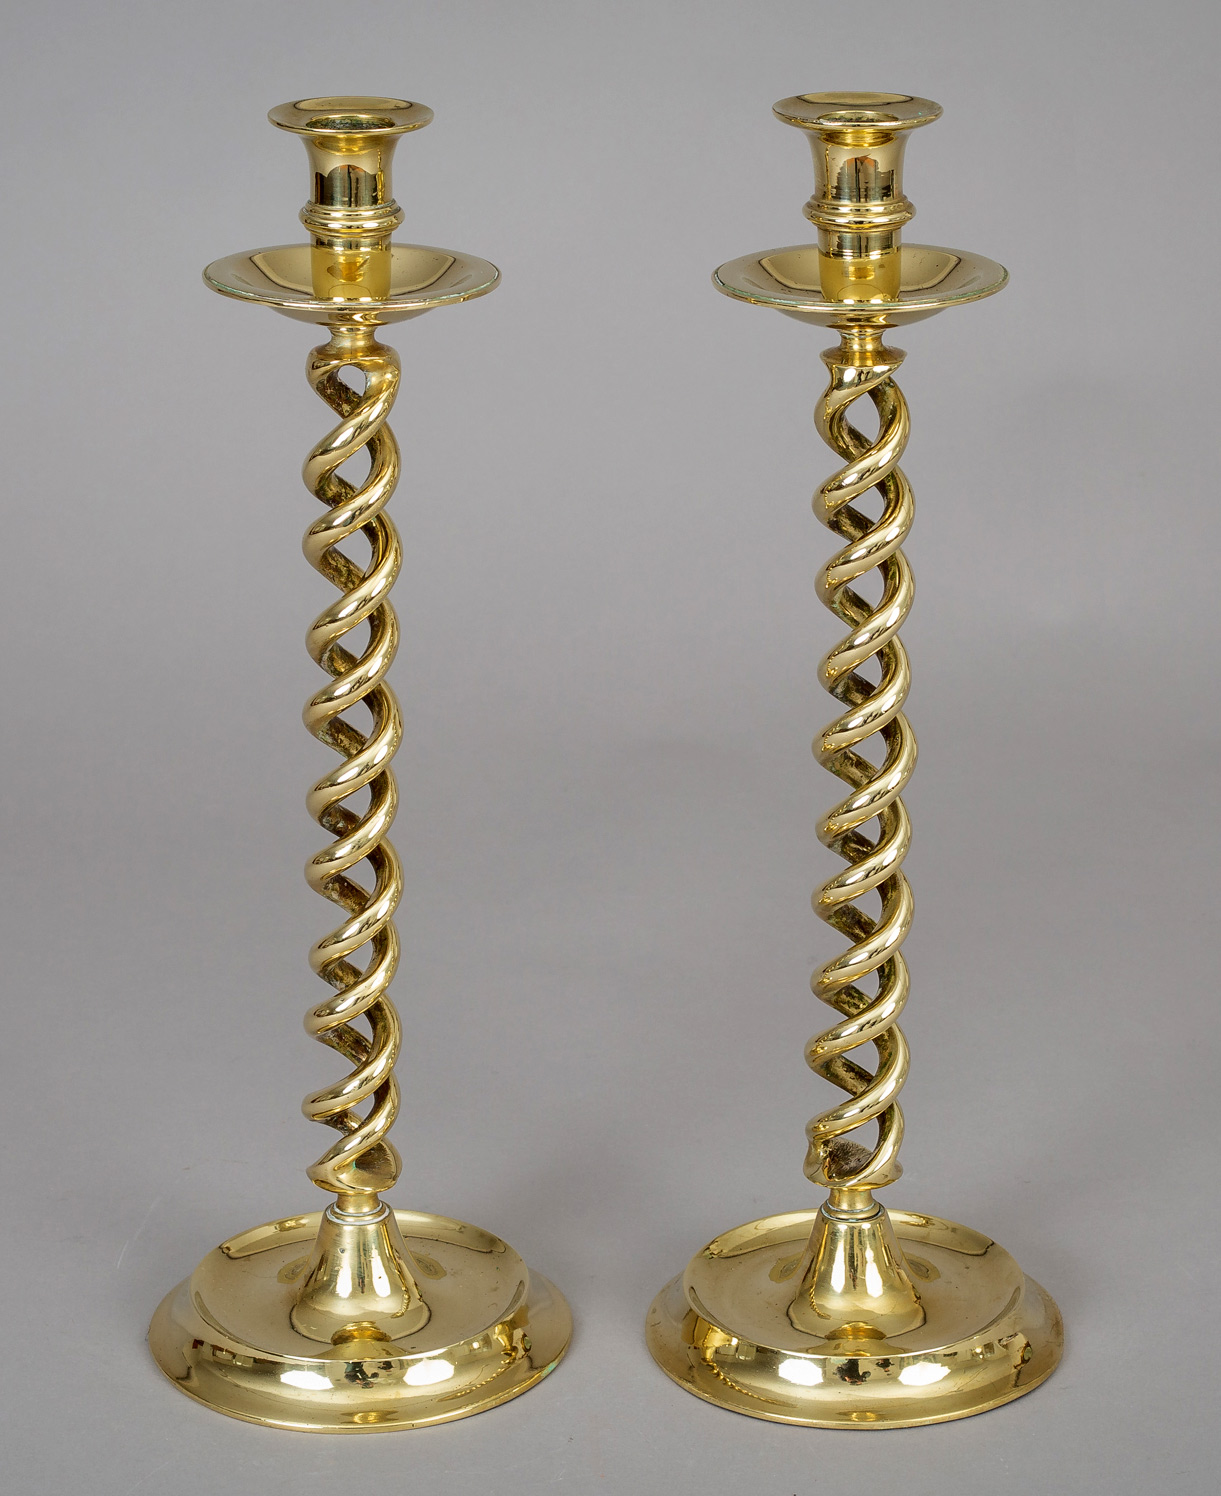 1 Pair solid brass open Barley Twist candlesticks